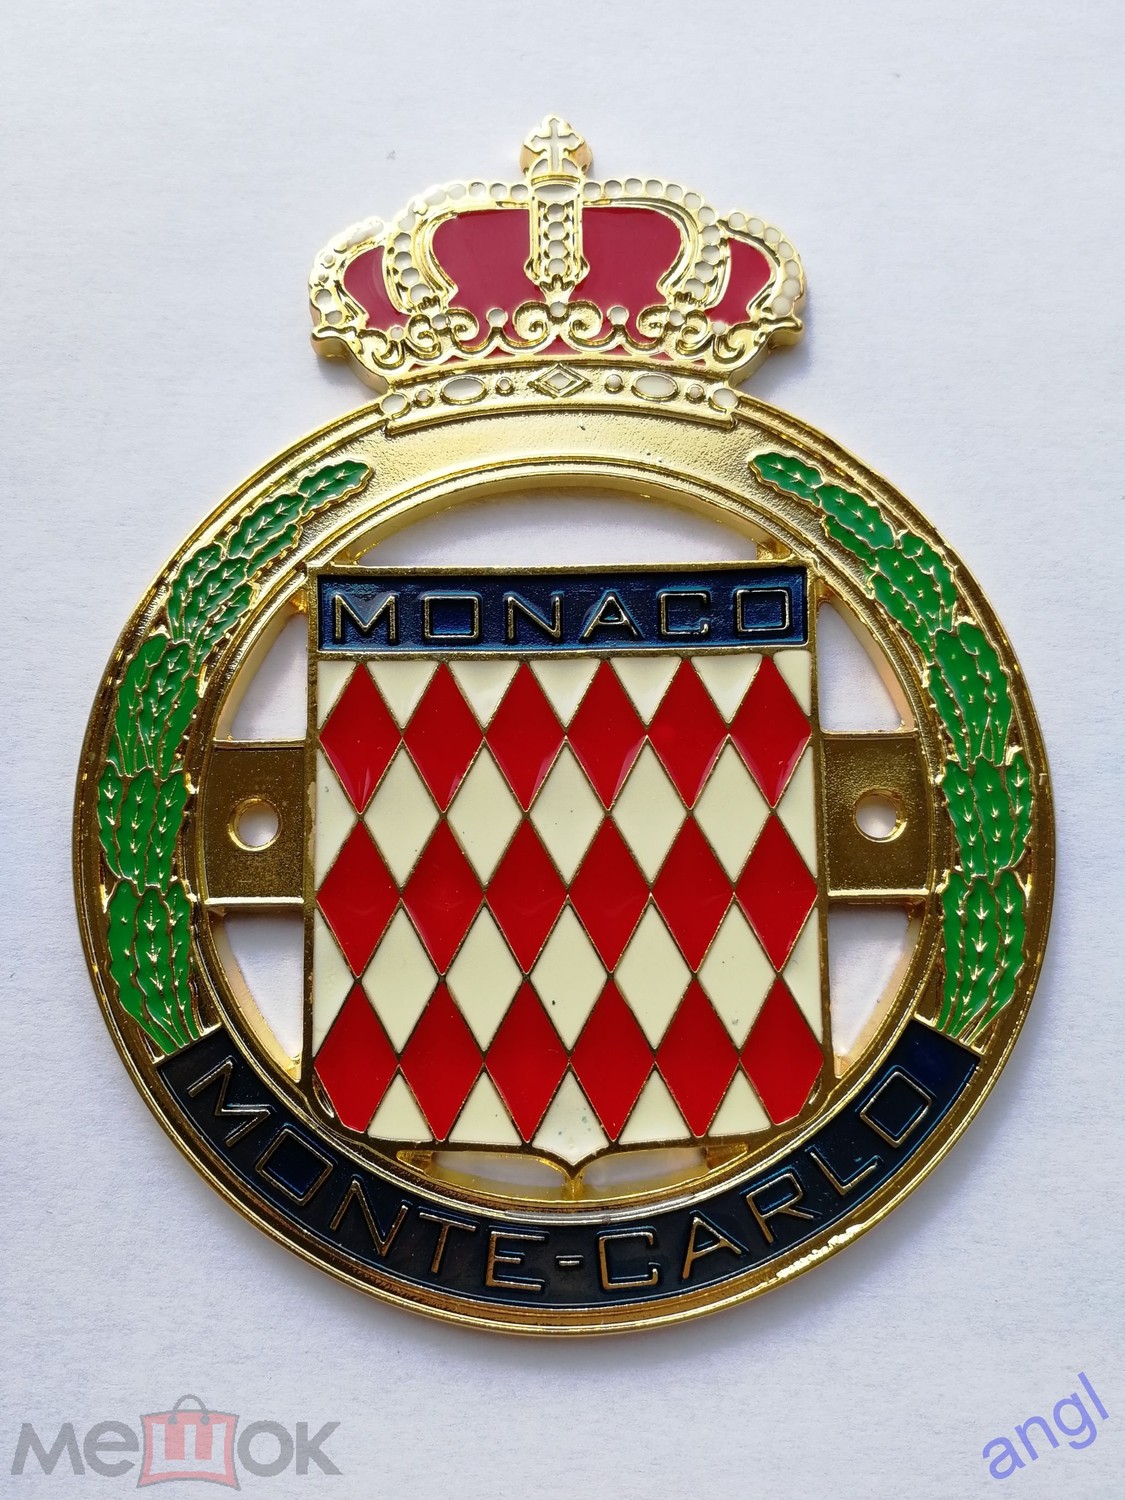 Montecarlo Automobile